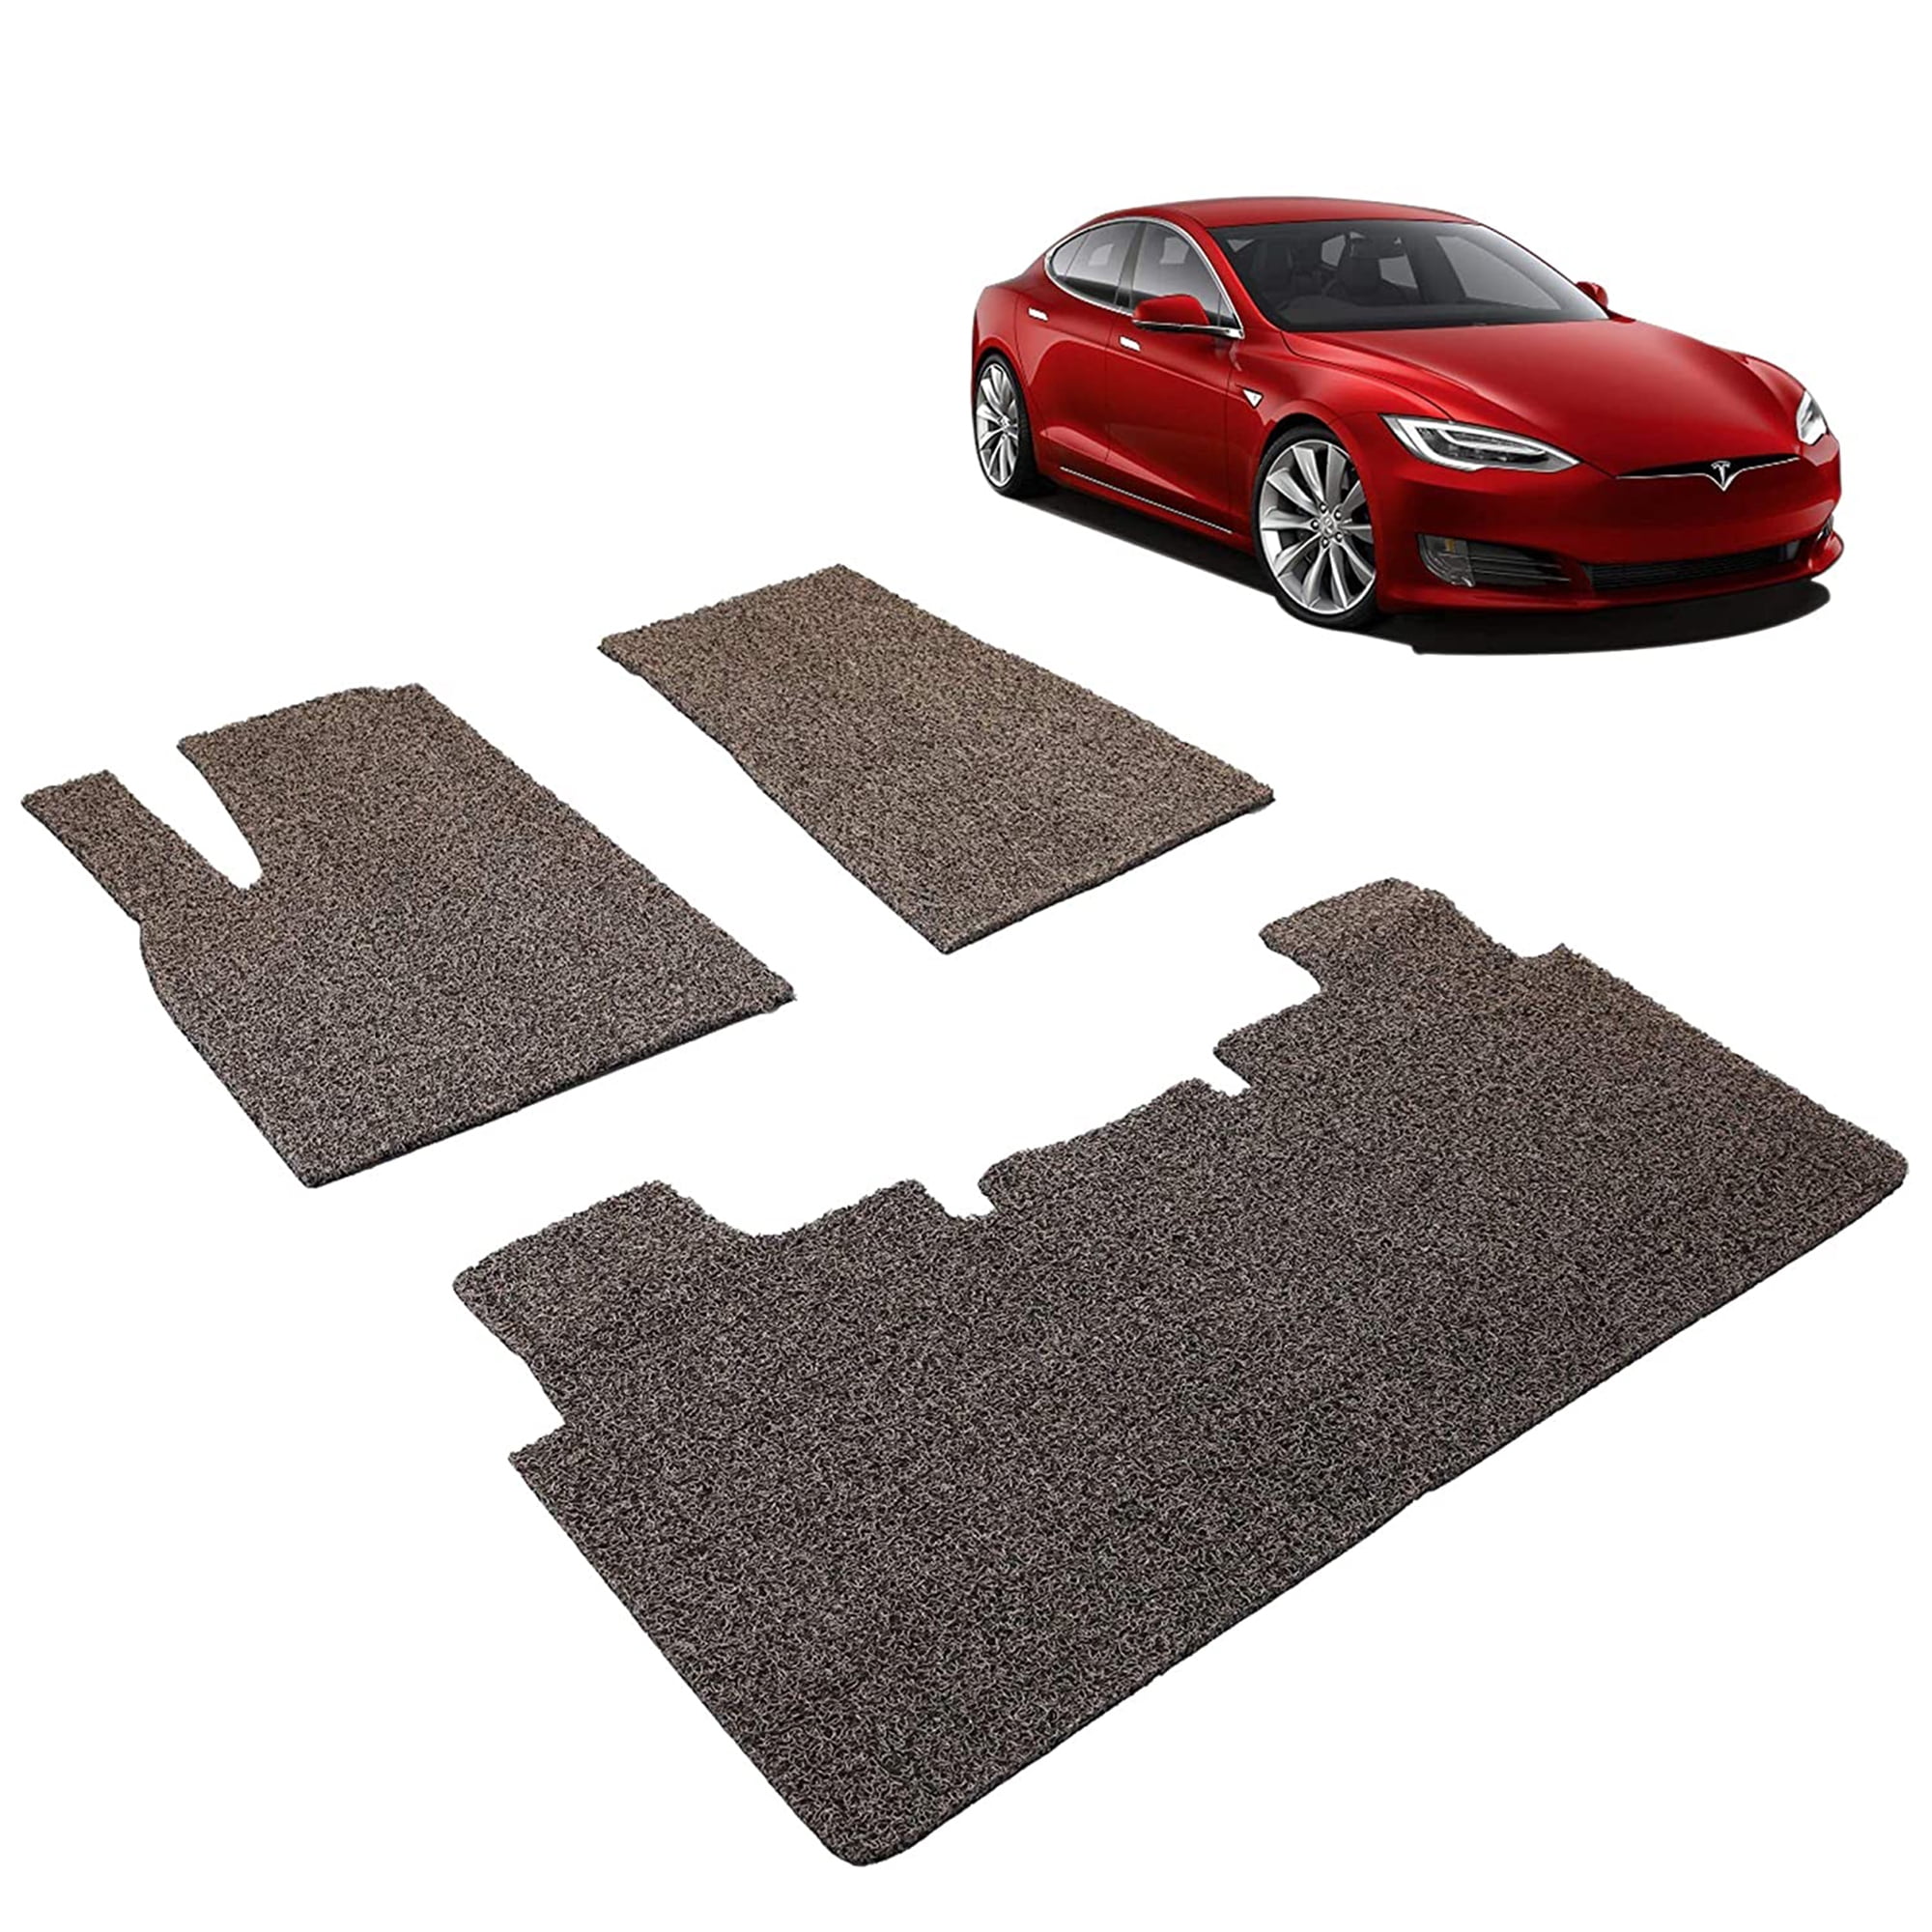 KARMAS PRODUCT Tesla Model S 5 Seats 3 Piece Car Accessories Floor